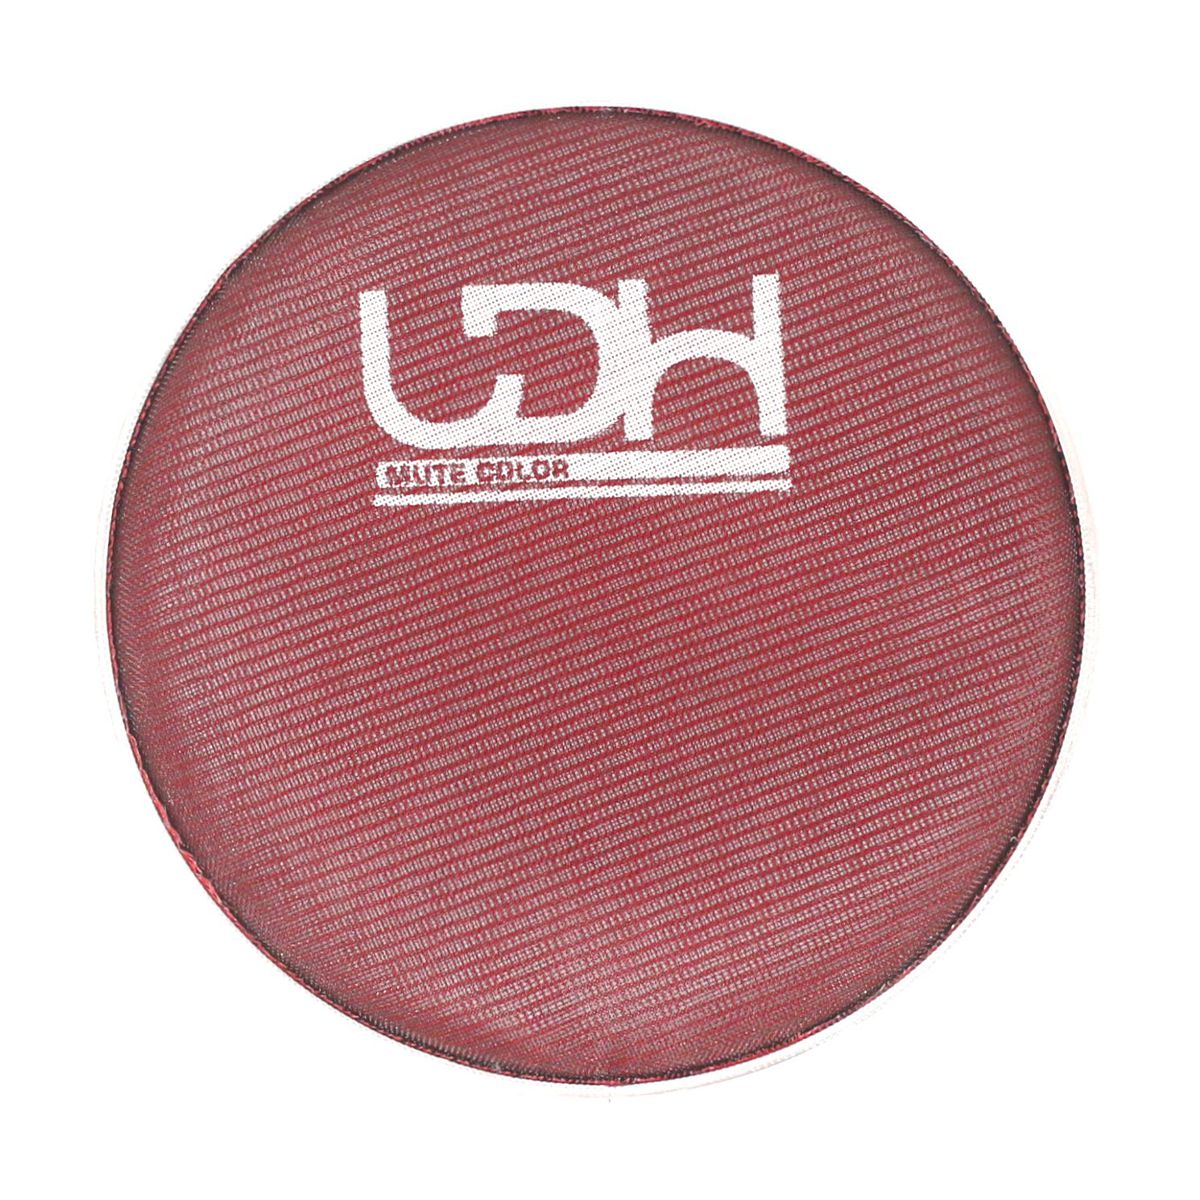 Pele Muda de Bateria e Percussão 08 Mute Color RED Luen Drumhead - 98281